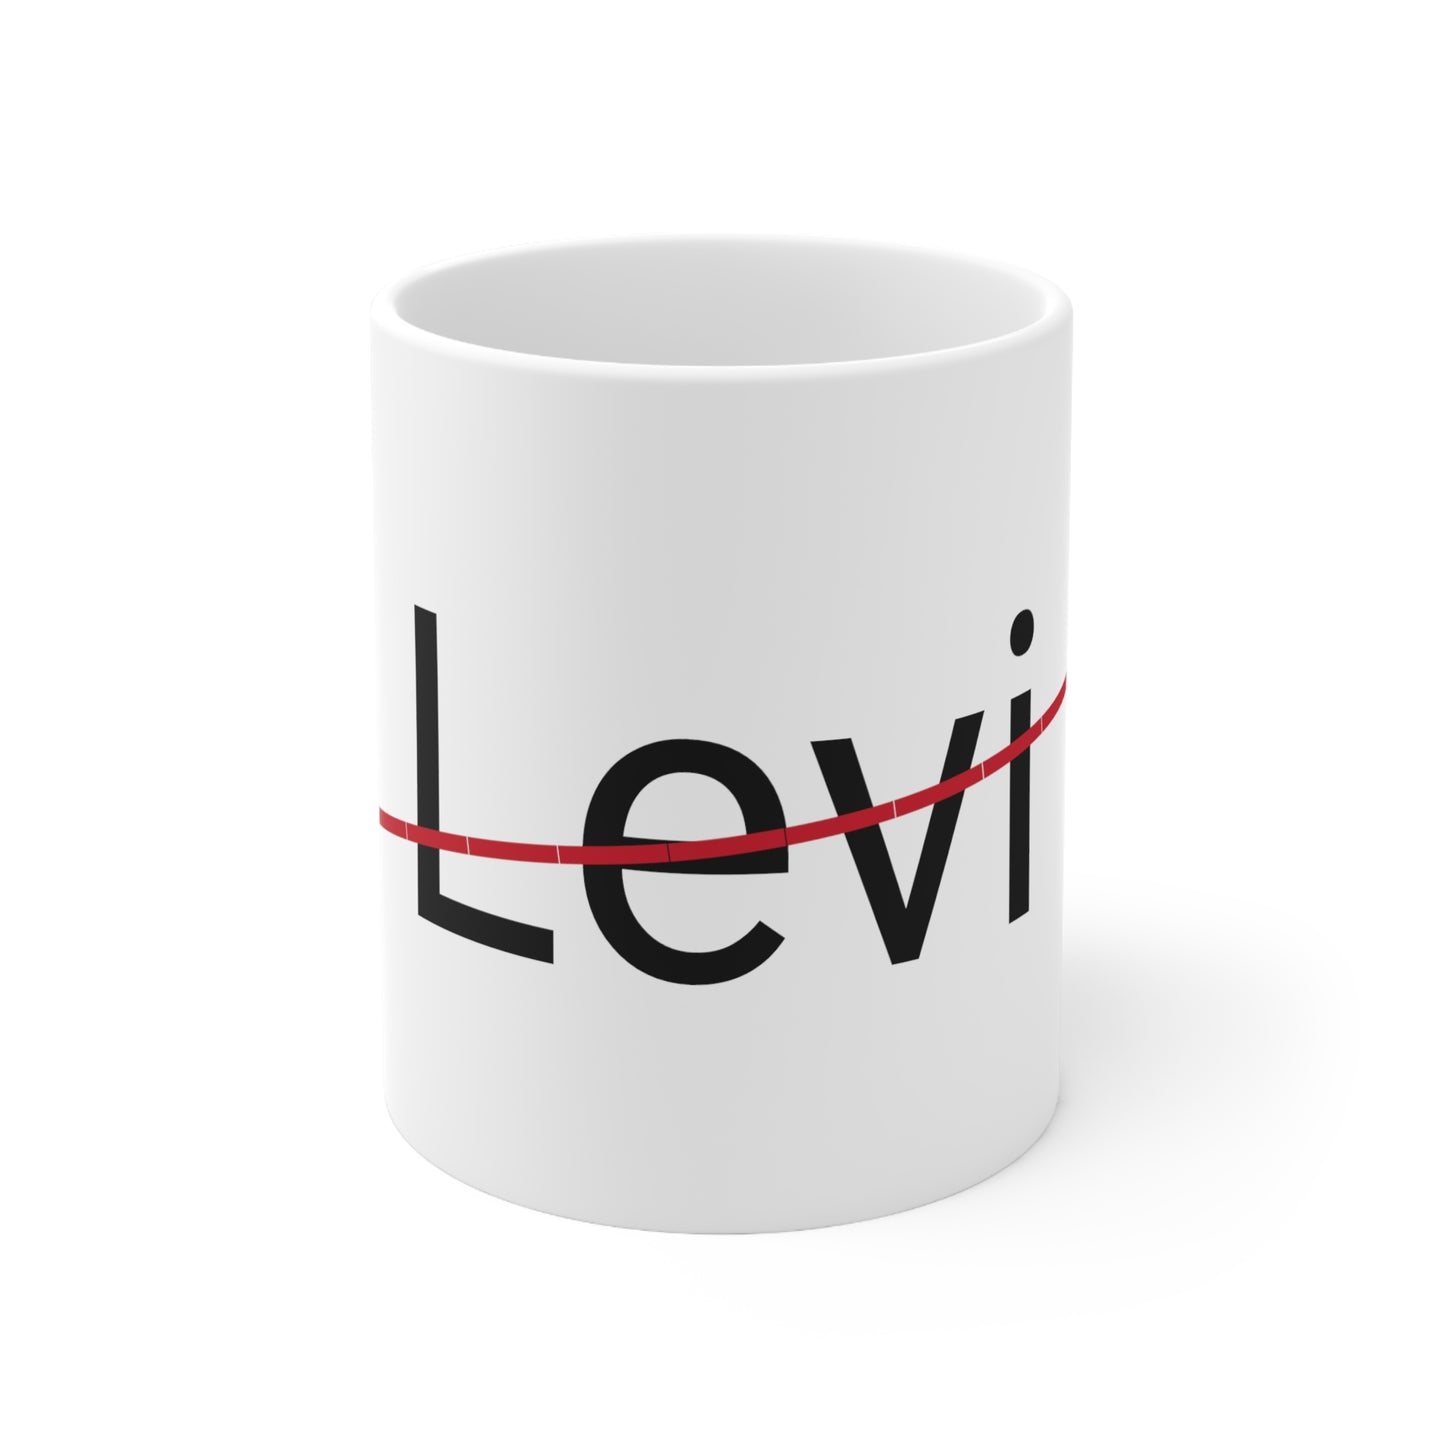 Levi is not my name coffee Mug 11oz